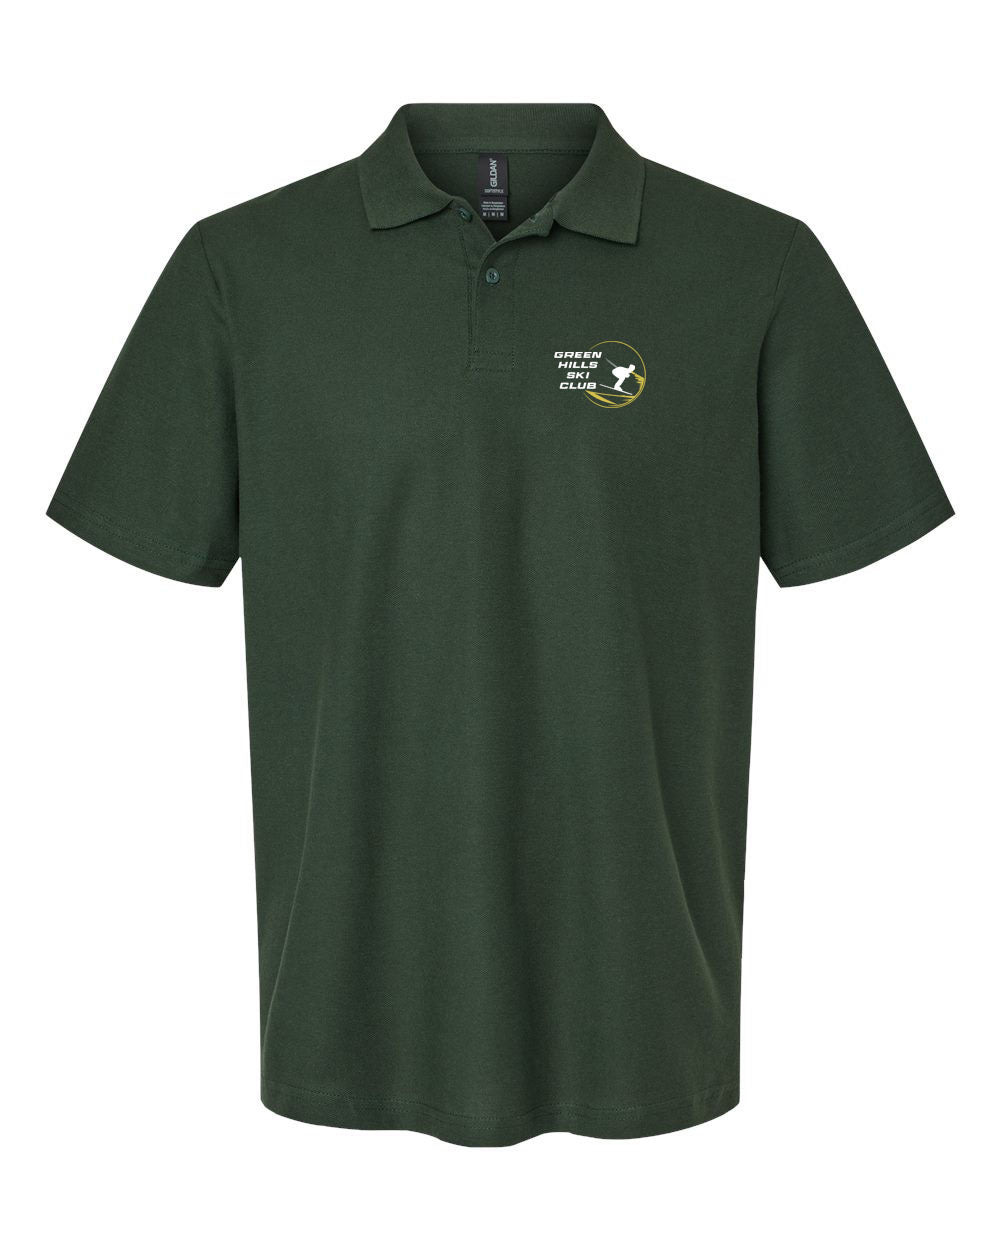 Green Hills Ski Club design 1 Polo T-Shirt